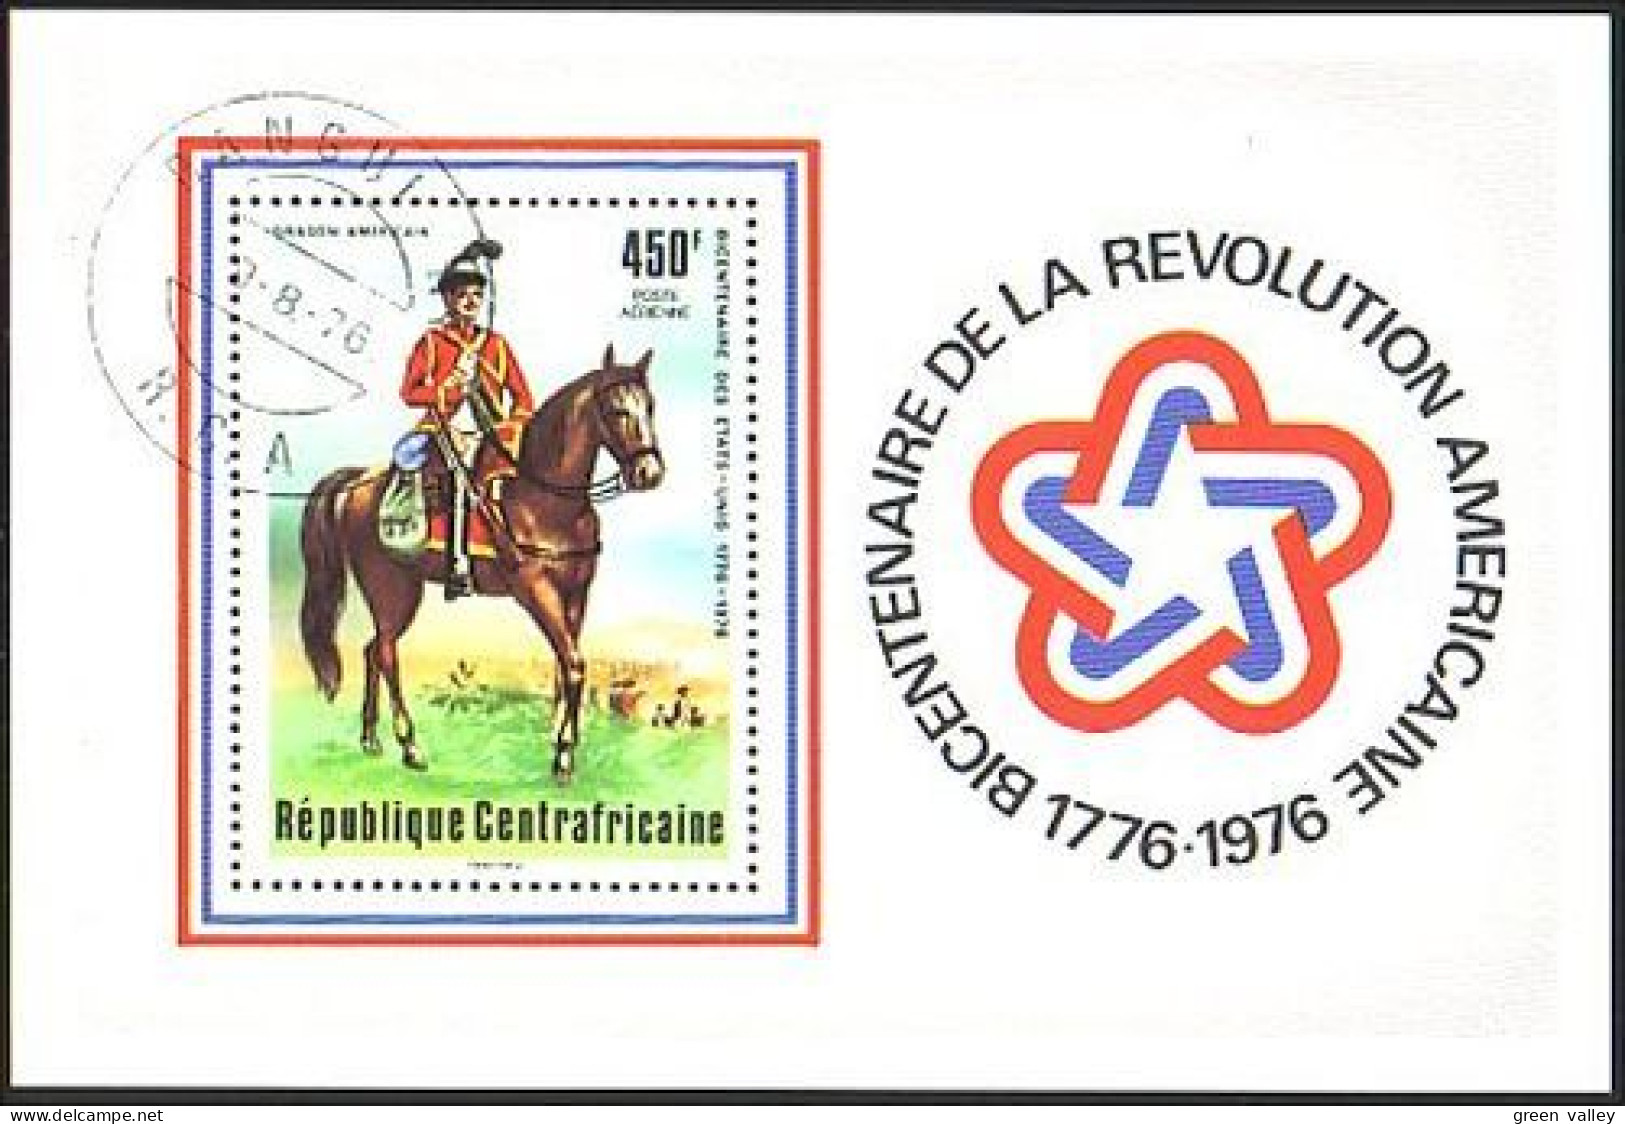 Centrafrique Revolution Americaine (A51-460b) - Independecia USA